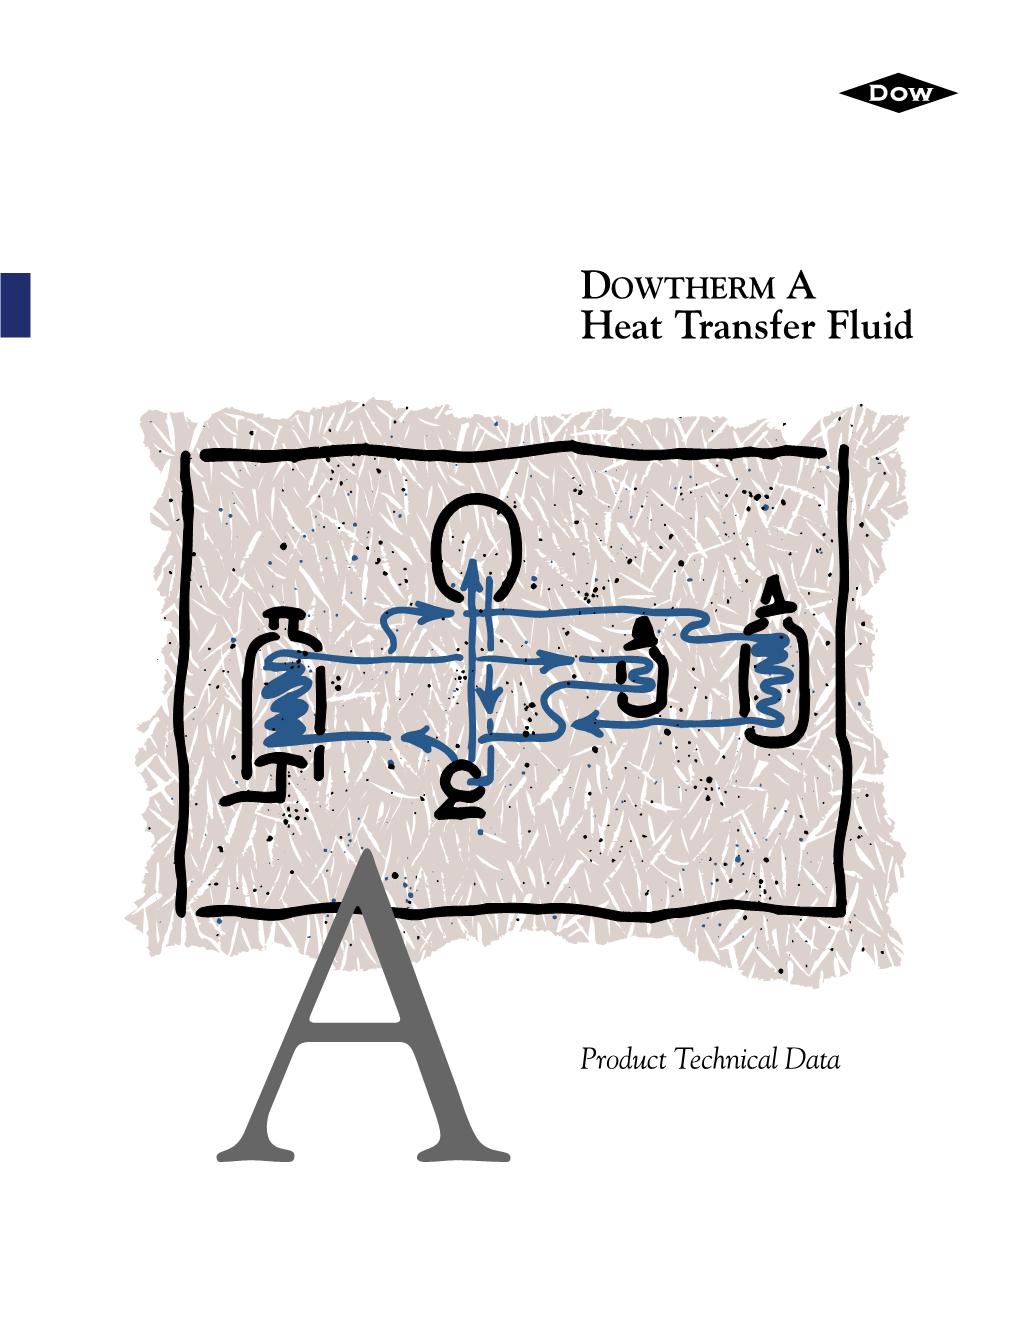 DOWTHERM a Heat Transfer Fluid